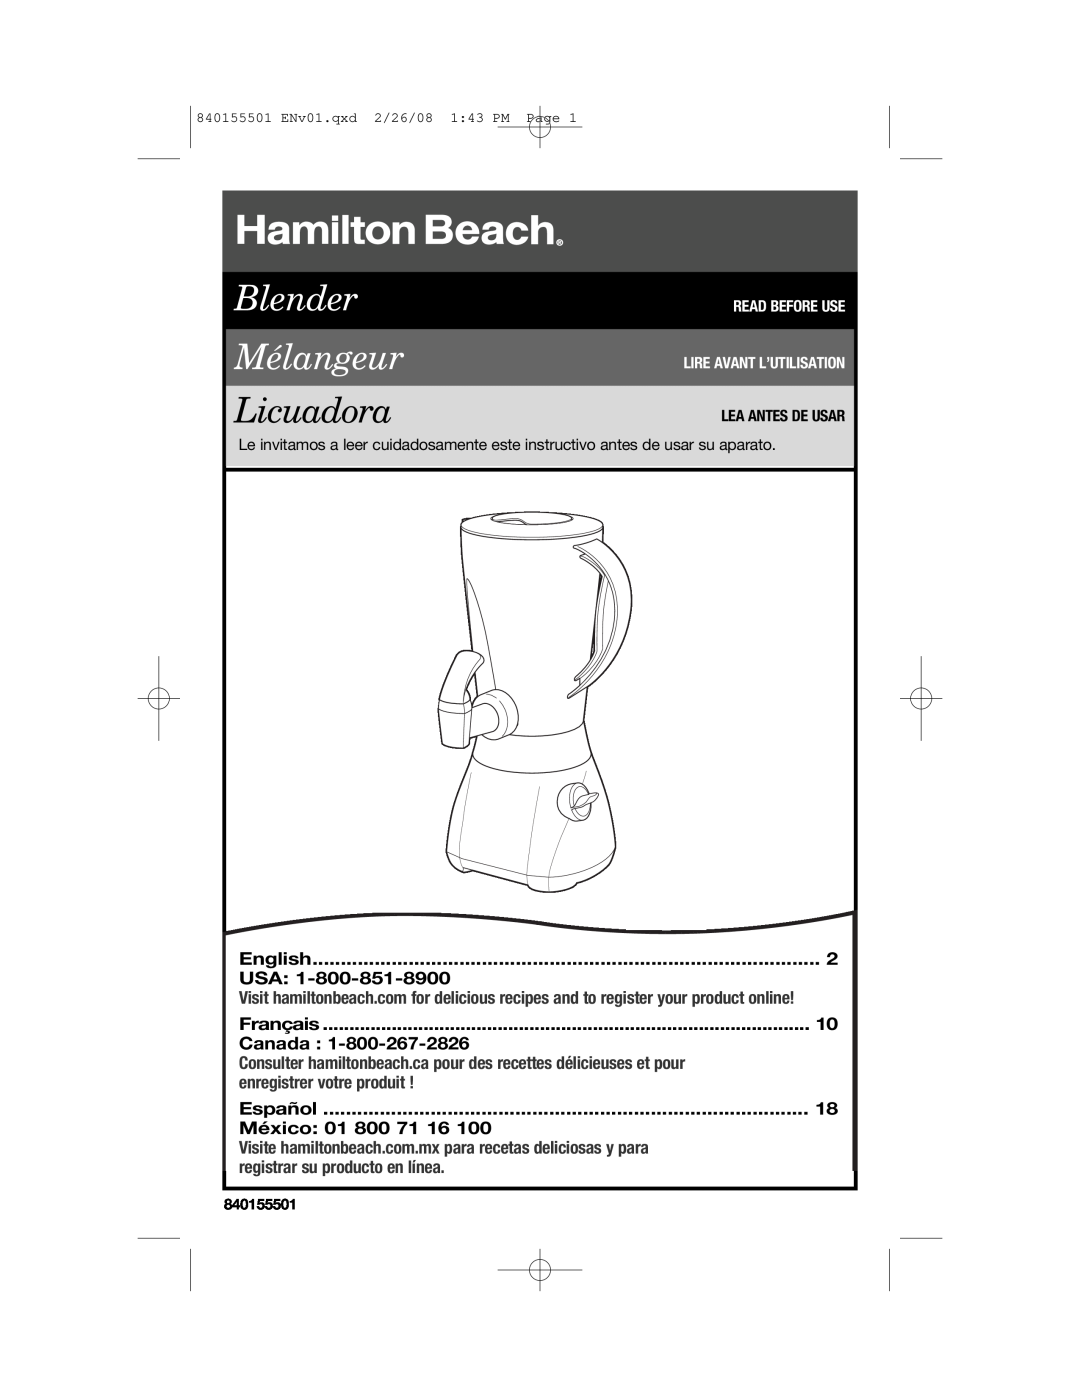 Hamilton Beach 54616C manual English, Français, Canada, Español, México 01, Blender Mélangeur, Licuadora, 840155501 